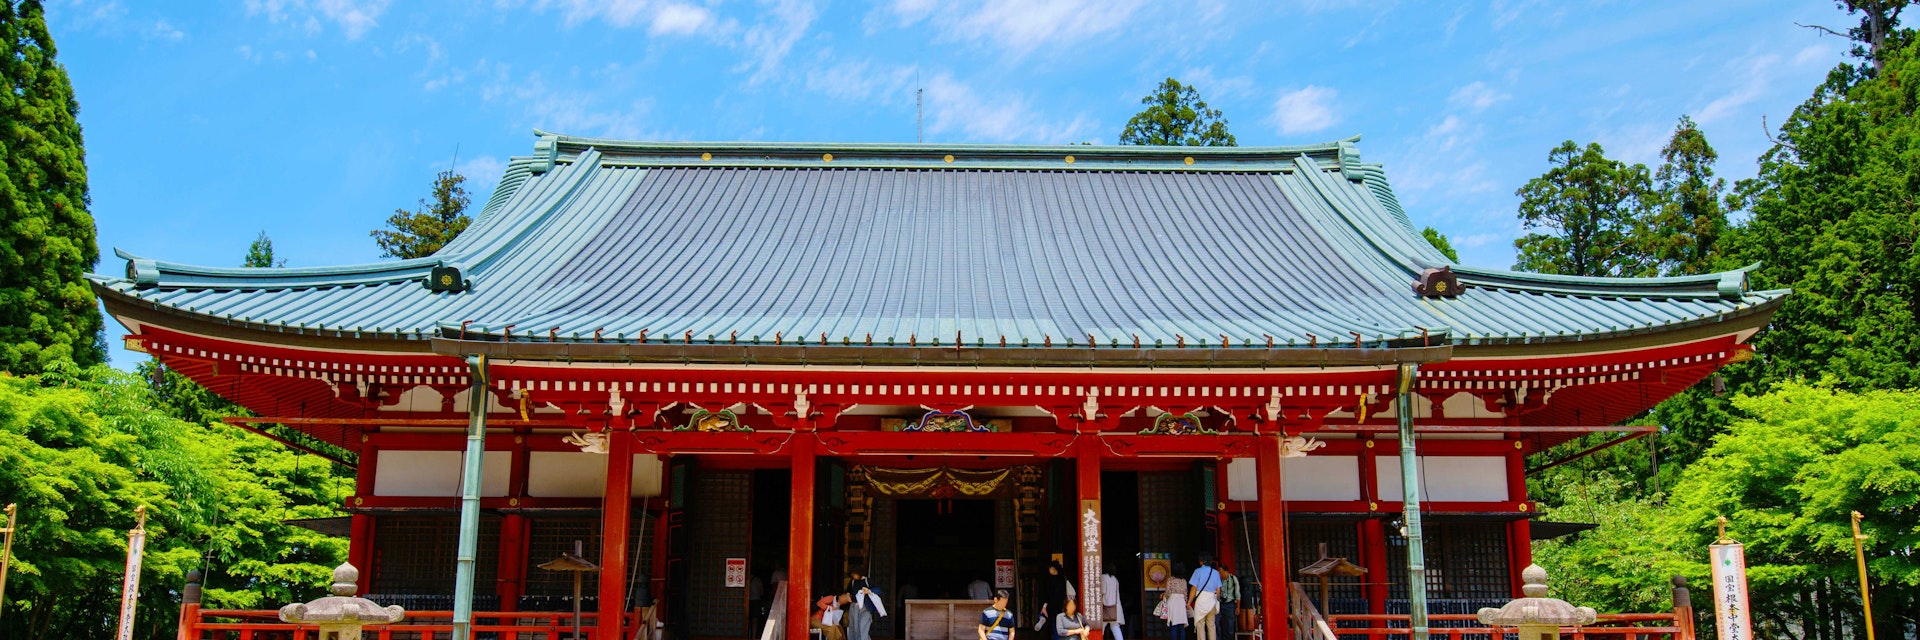 ktoyo,japan - May 21,2018 : Mt.Hiei-zan Enryaku-ji Temple in Kyoto,Japan.Enryaku-ji Temple was founded by the priest Saicho In 788.